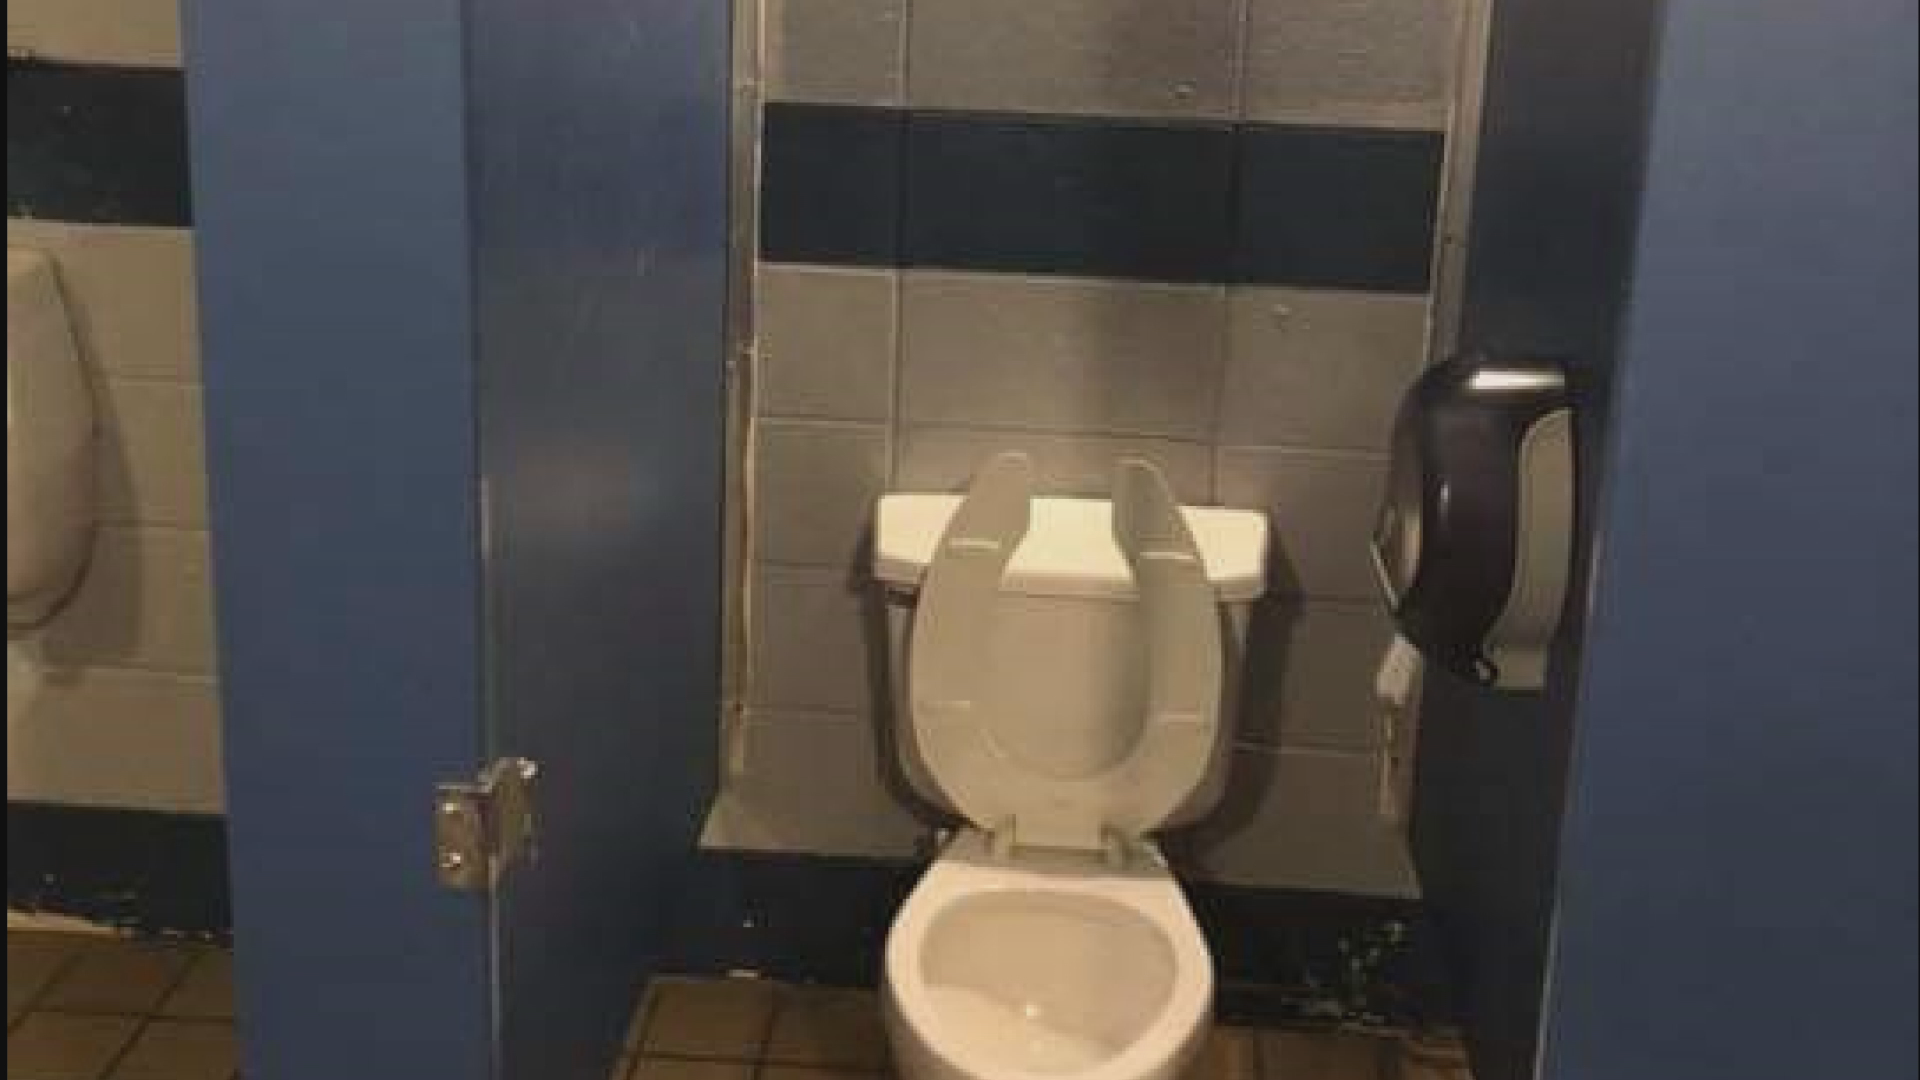 Clogged Toilet Causes High School Evacuation In North Carolina